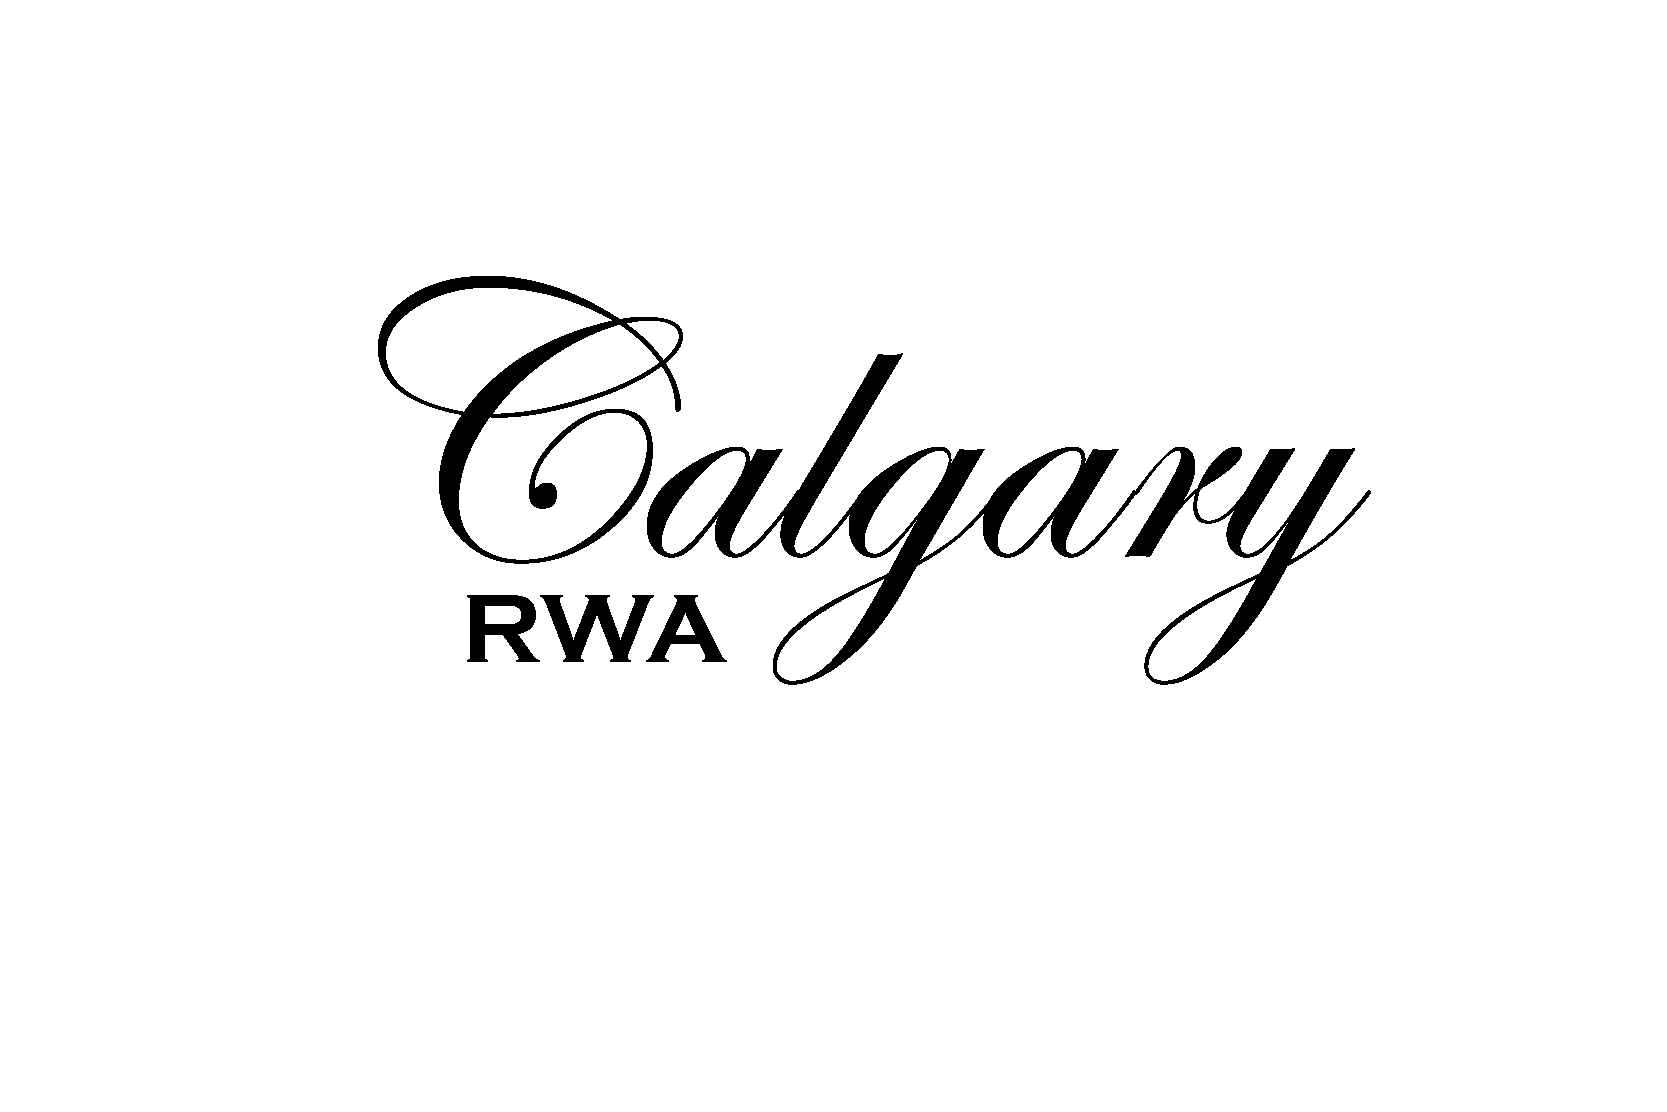 (c) Calgaryrwa.com